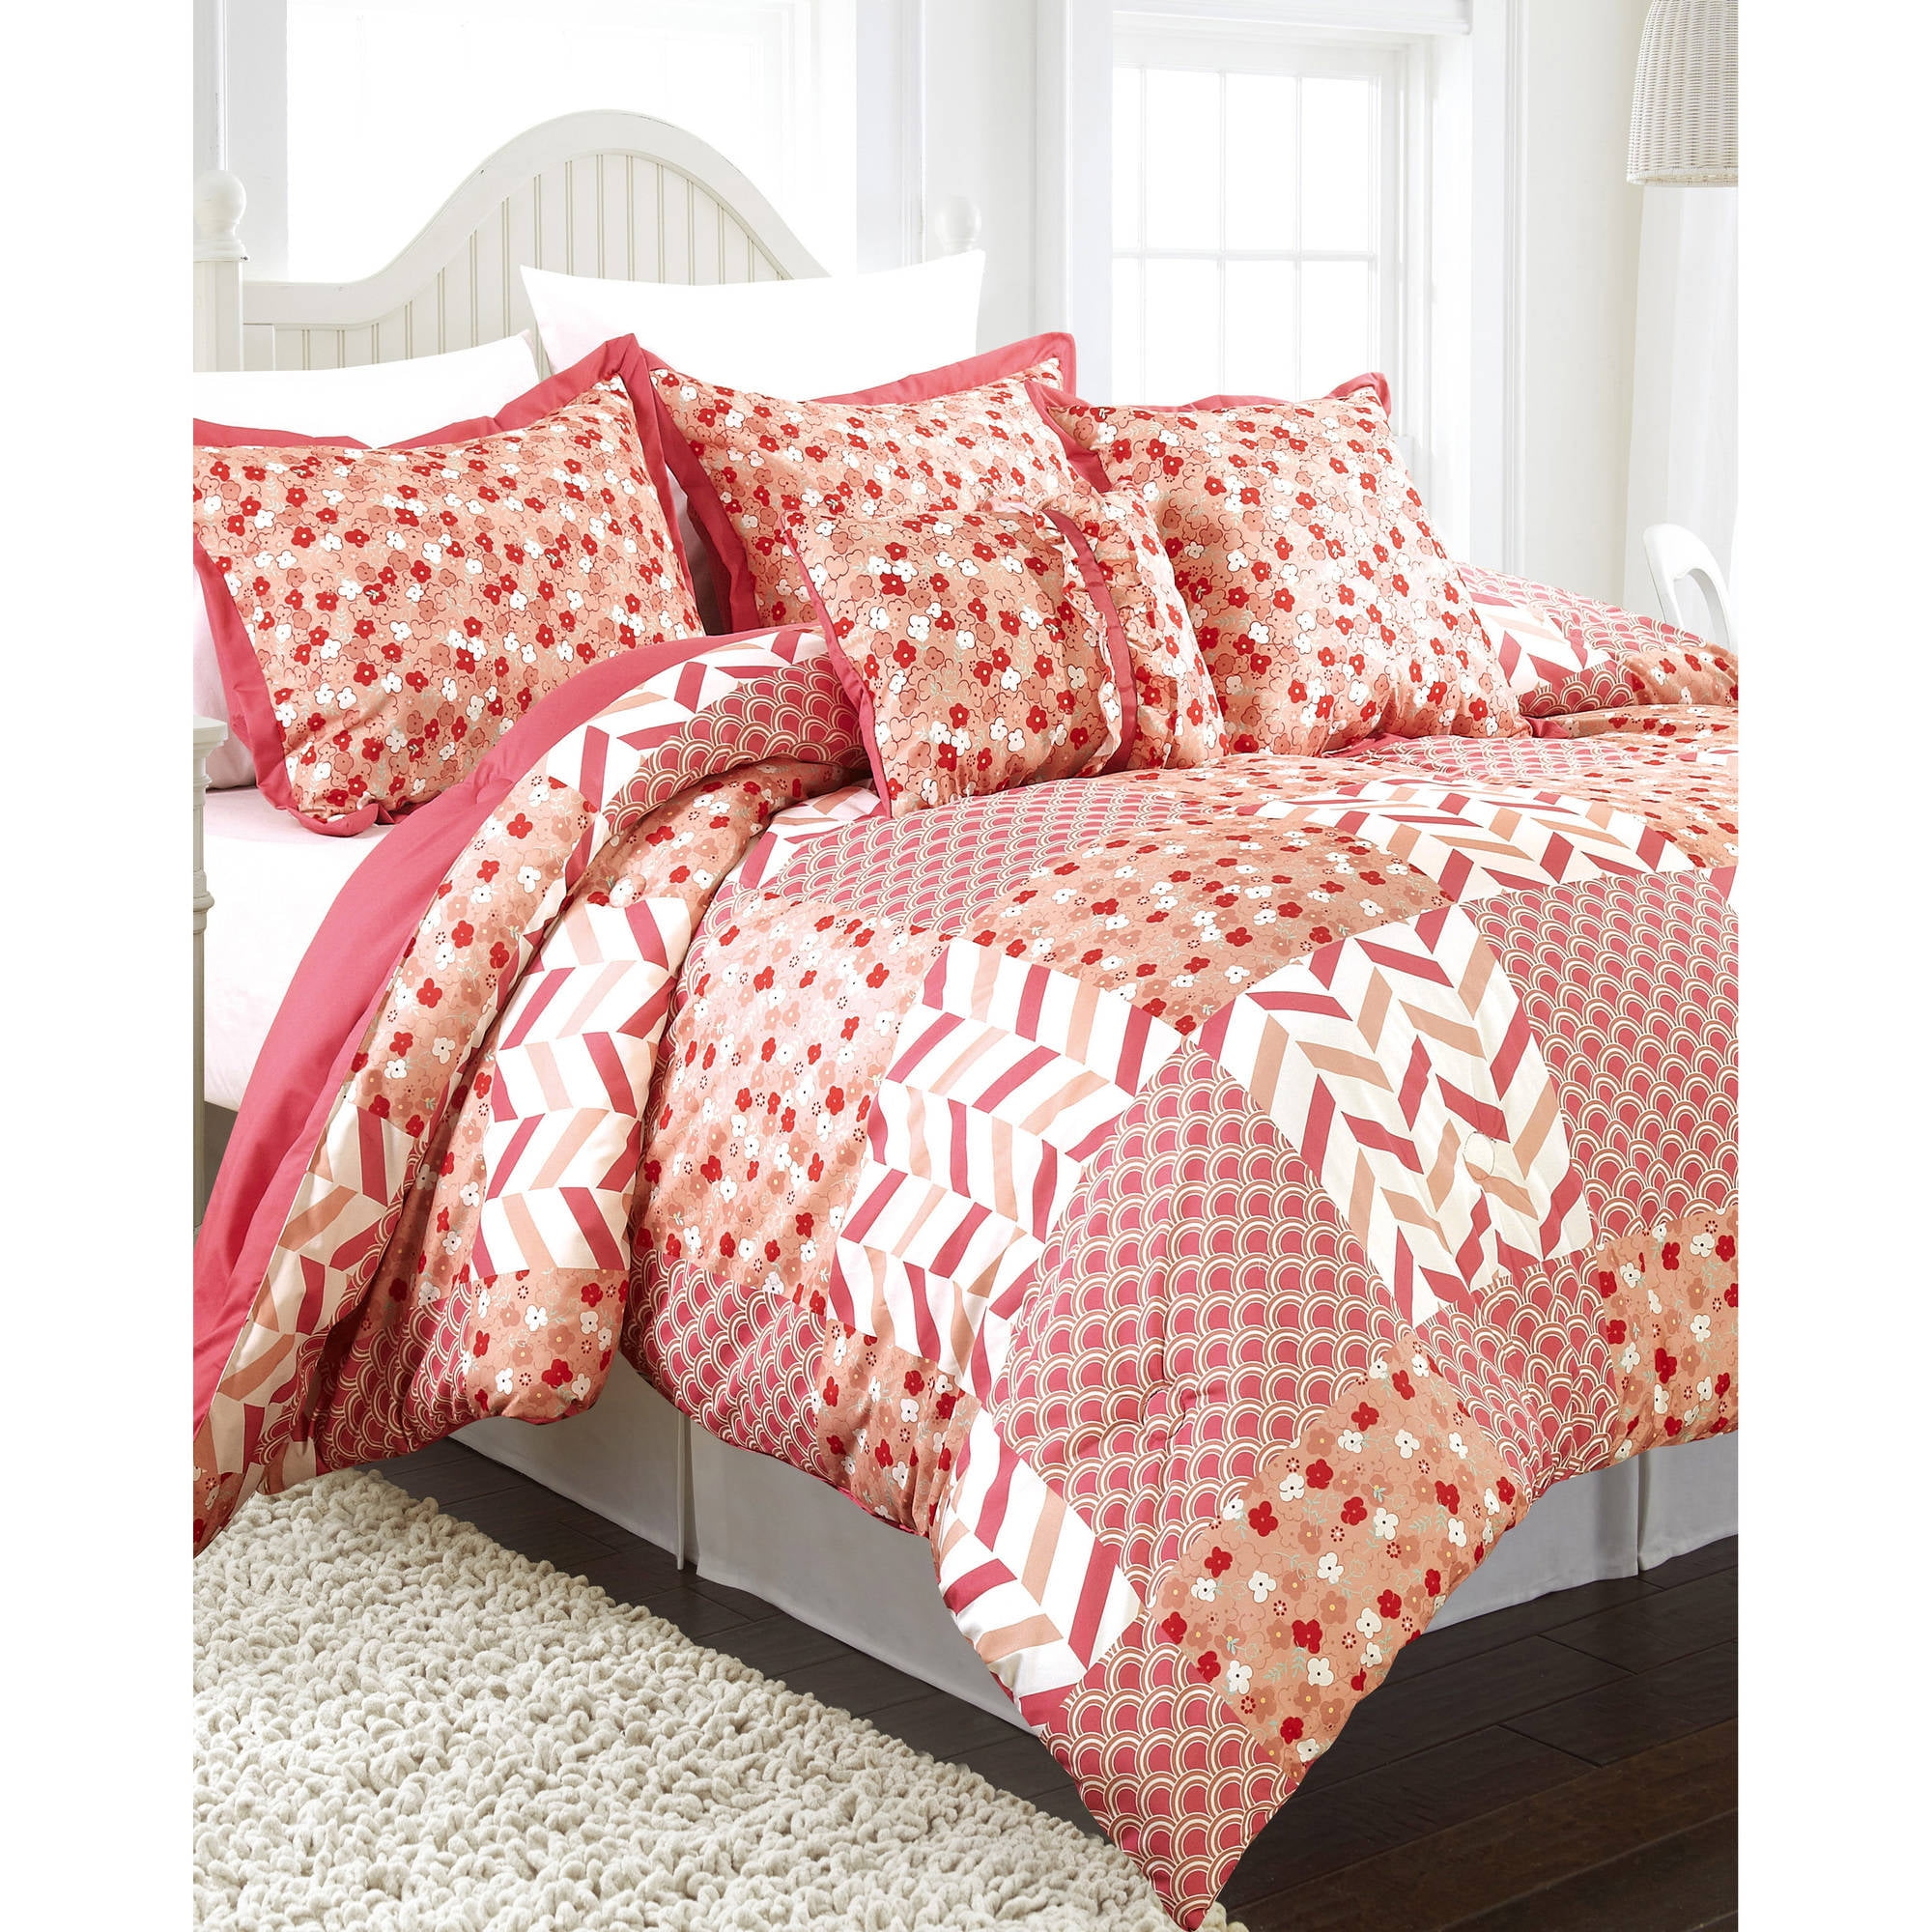 Piper 5 Piece Bedding Comforter Set Pink Twin